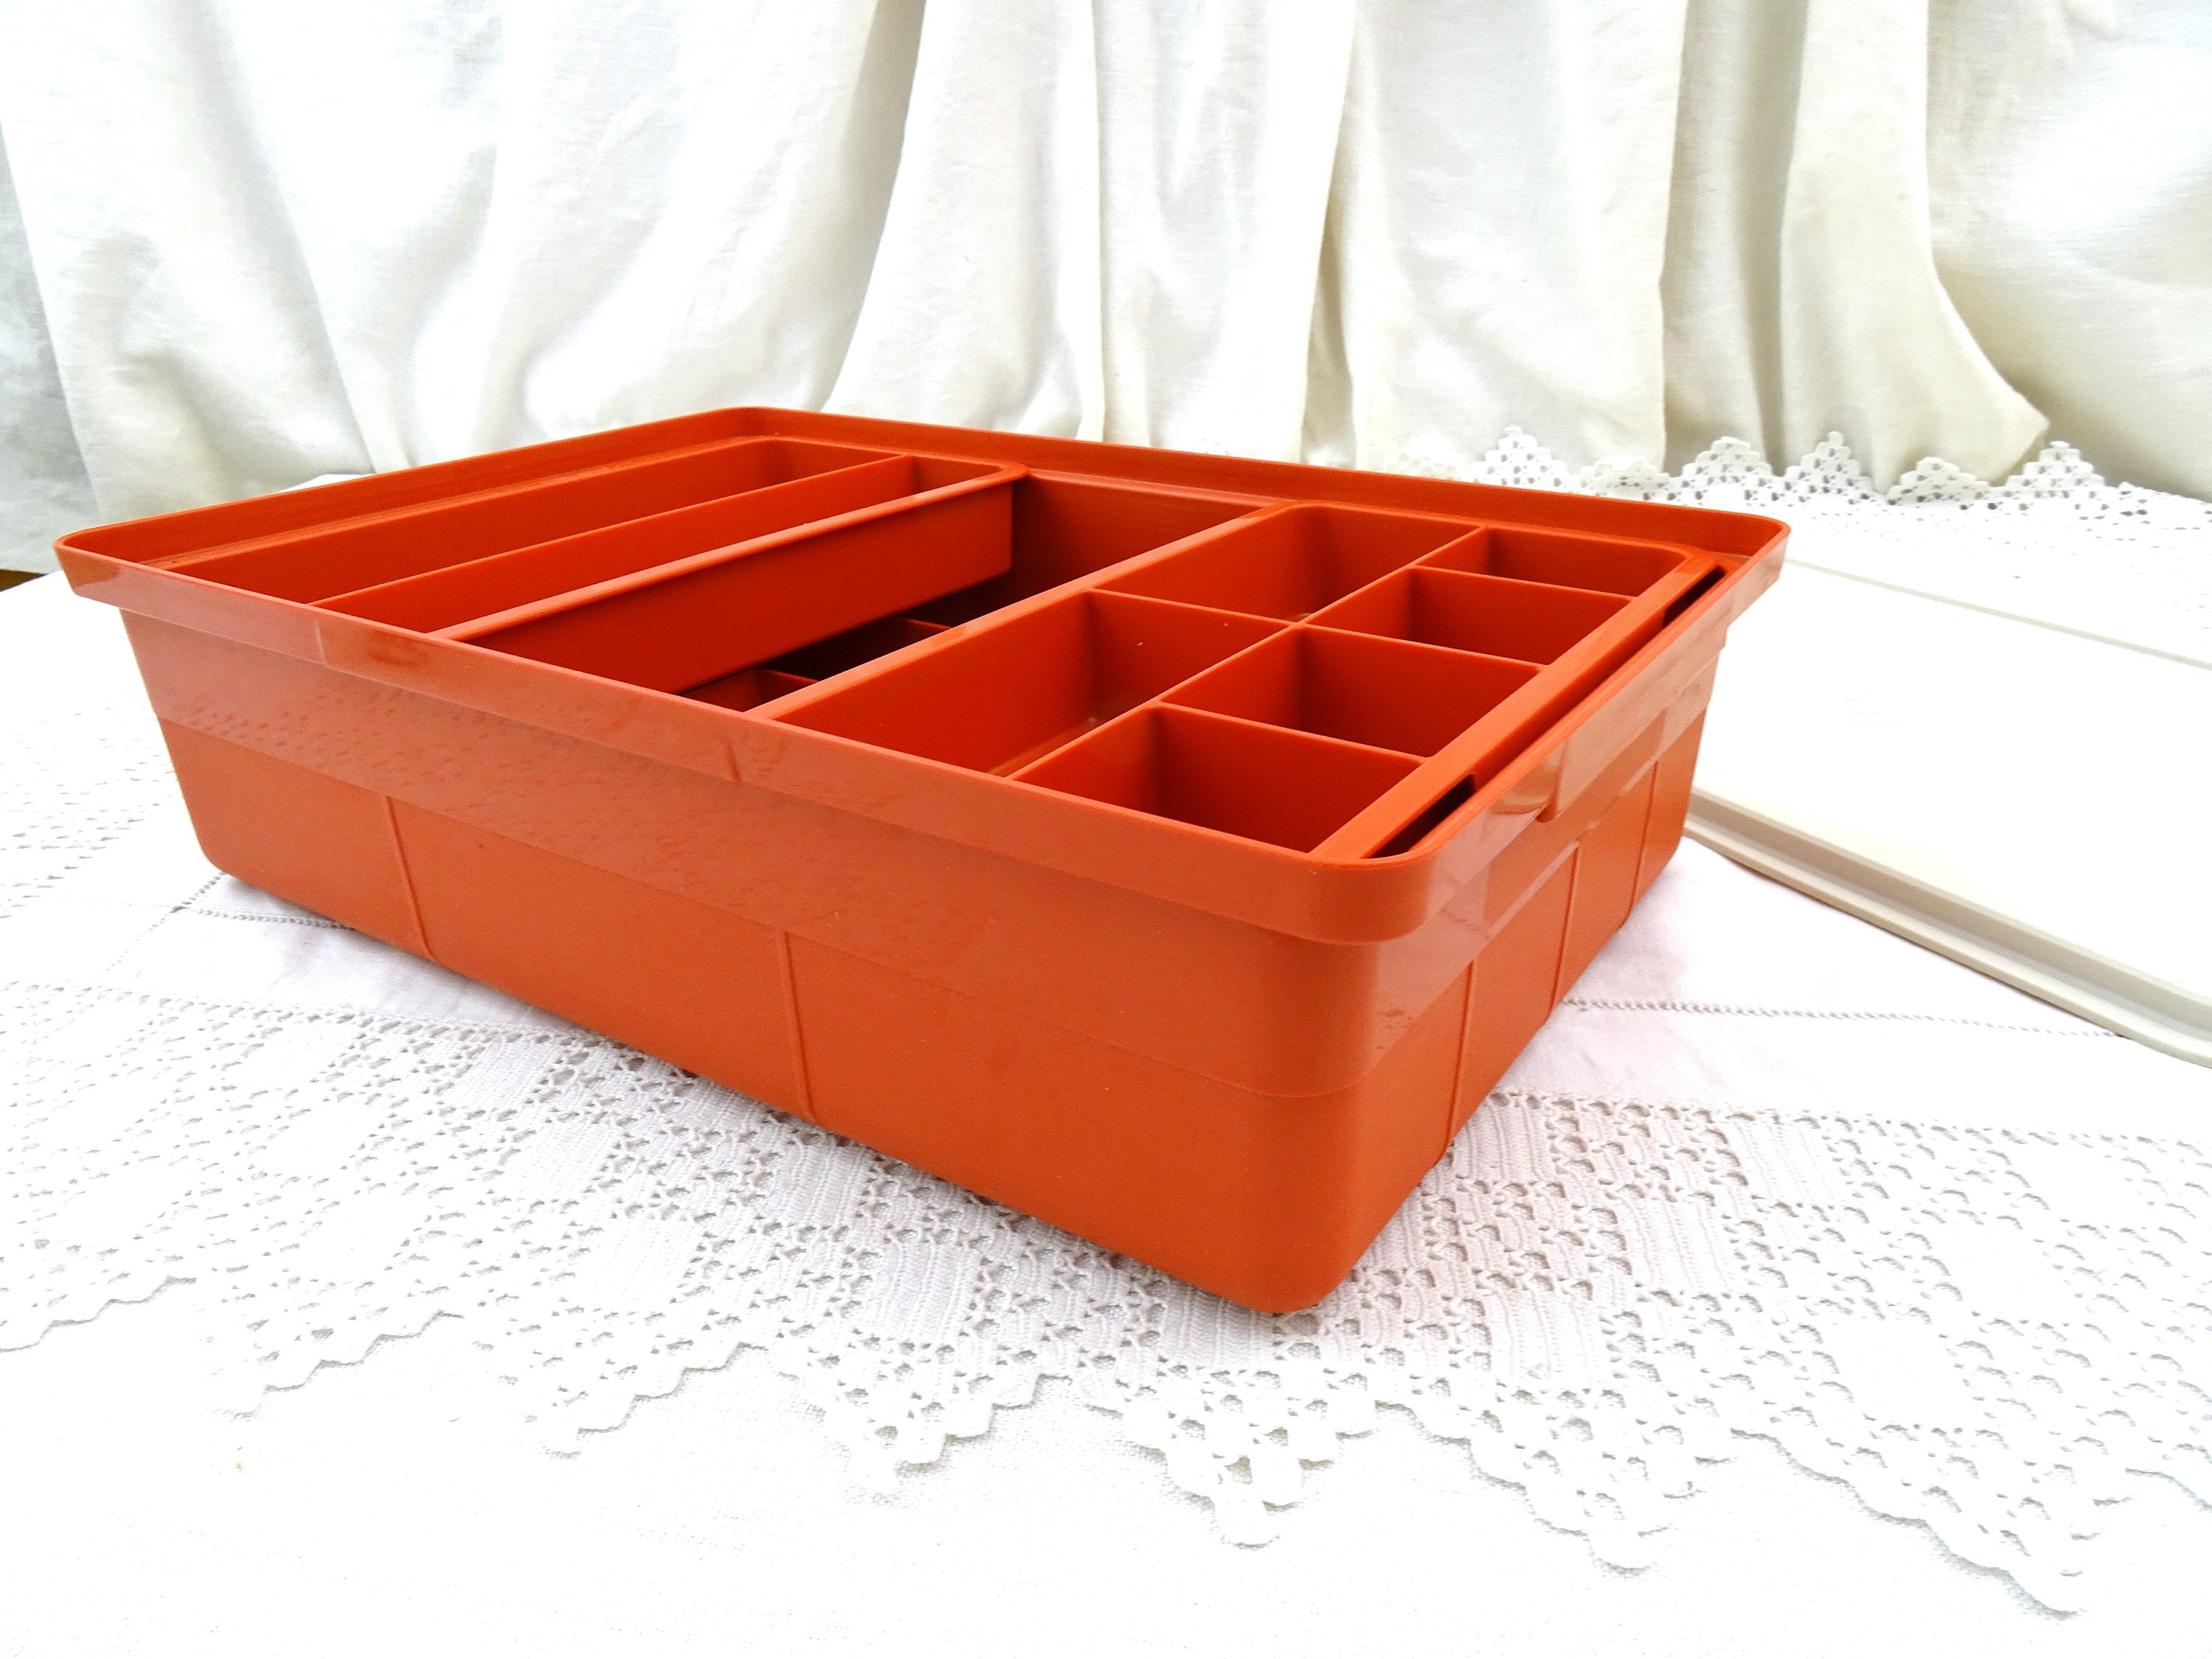 Tupperware Tuppercraft Orange Craft Box Organizer Container #1421 Vintage  W/ Lid